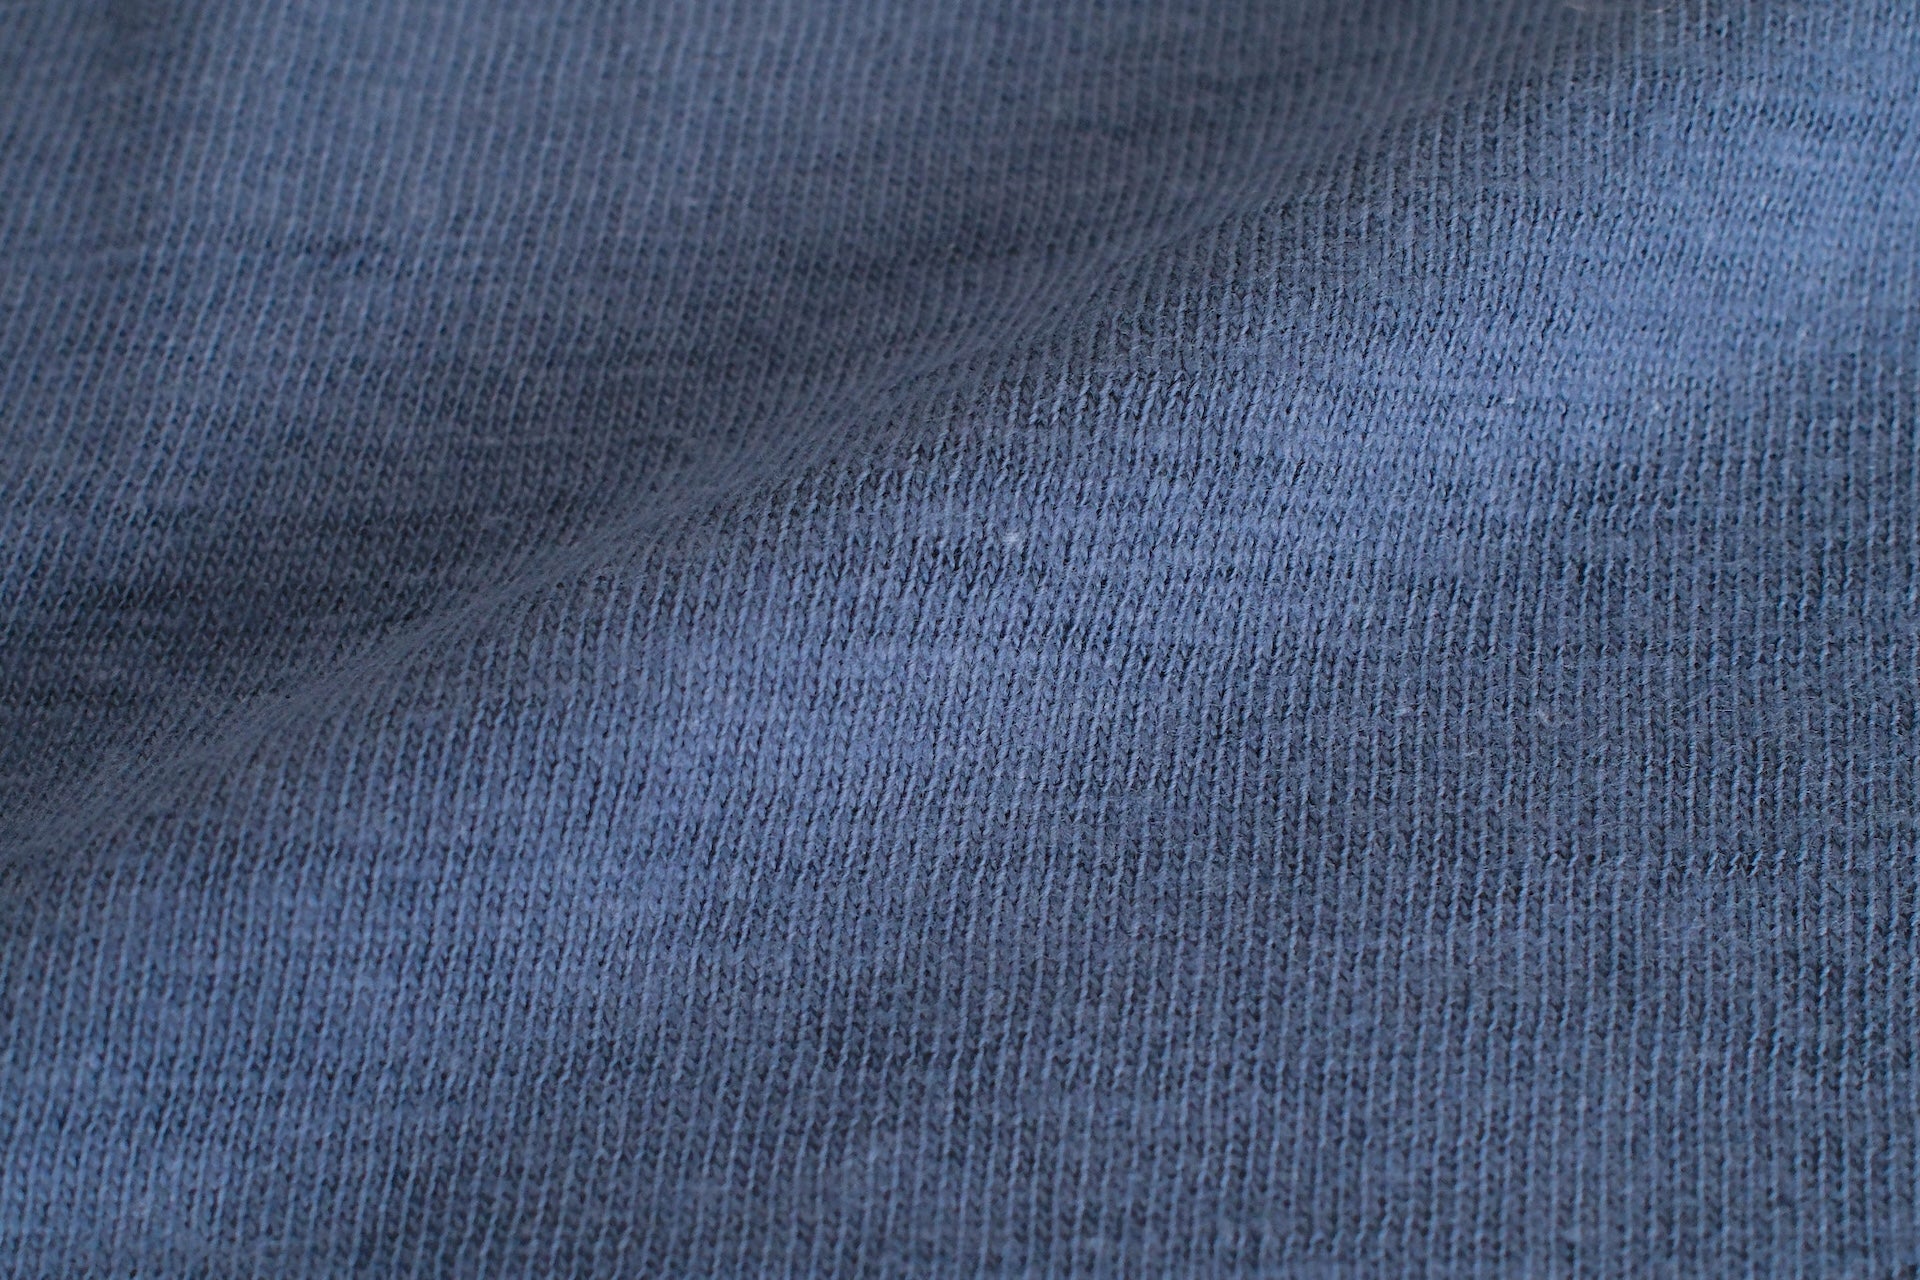 Warehouse 5.5oz "Bamboo Textured" Pocket Tee (Fade Blue)